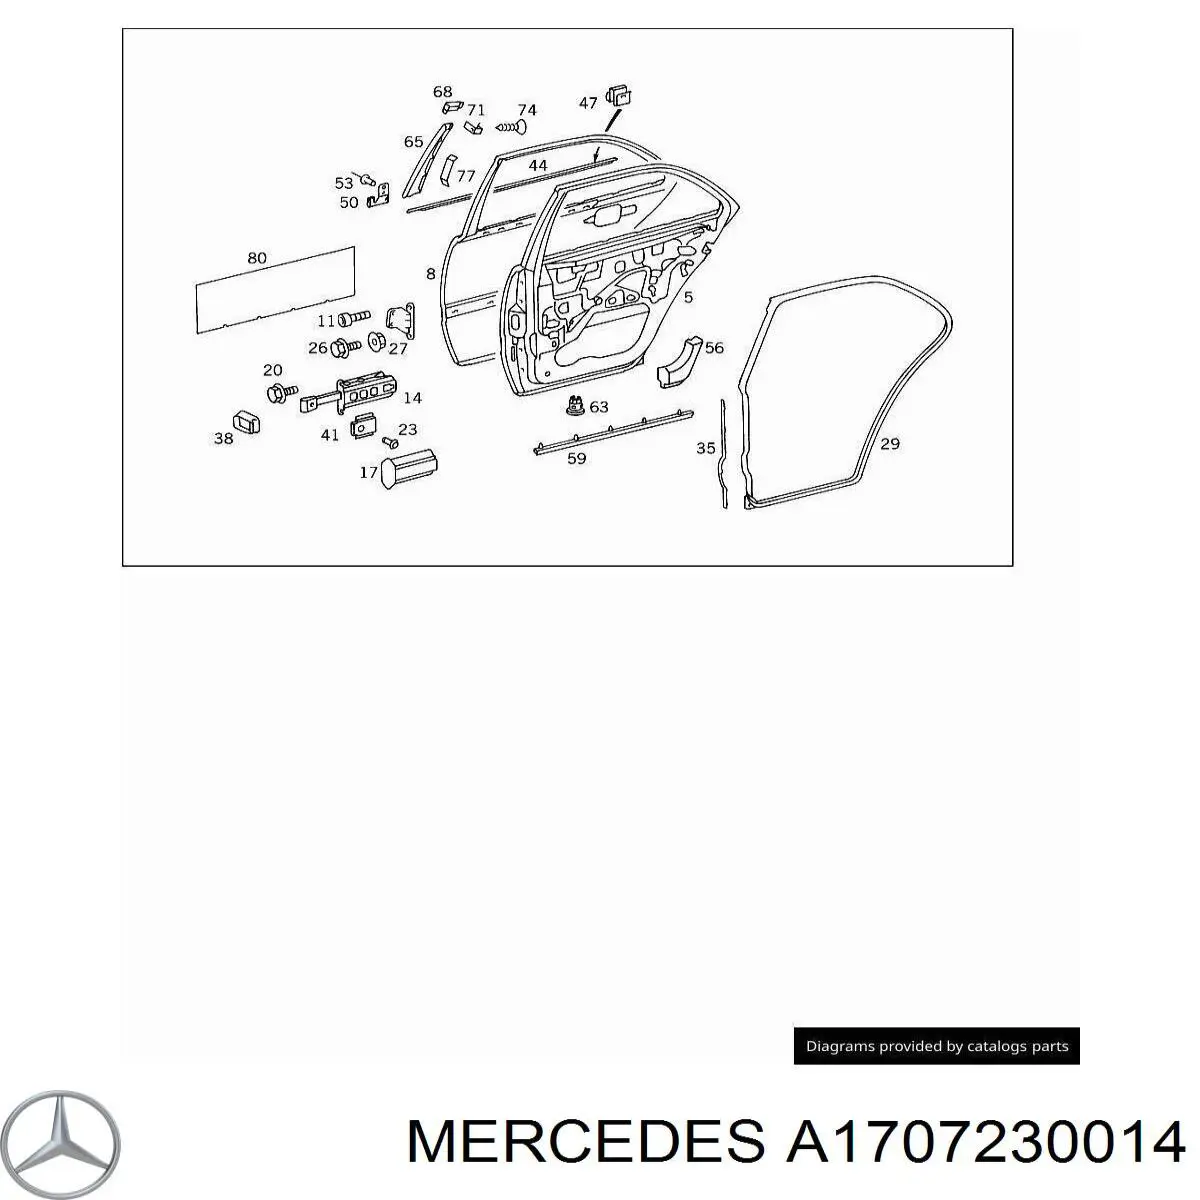 A1707230014 Mercedes